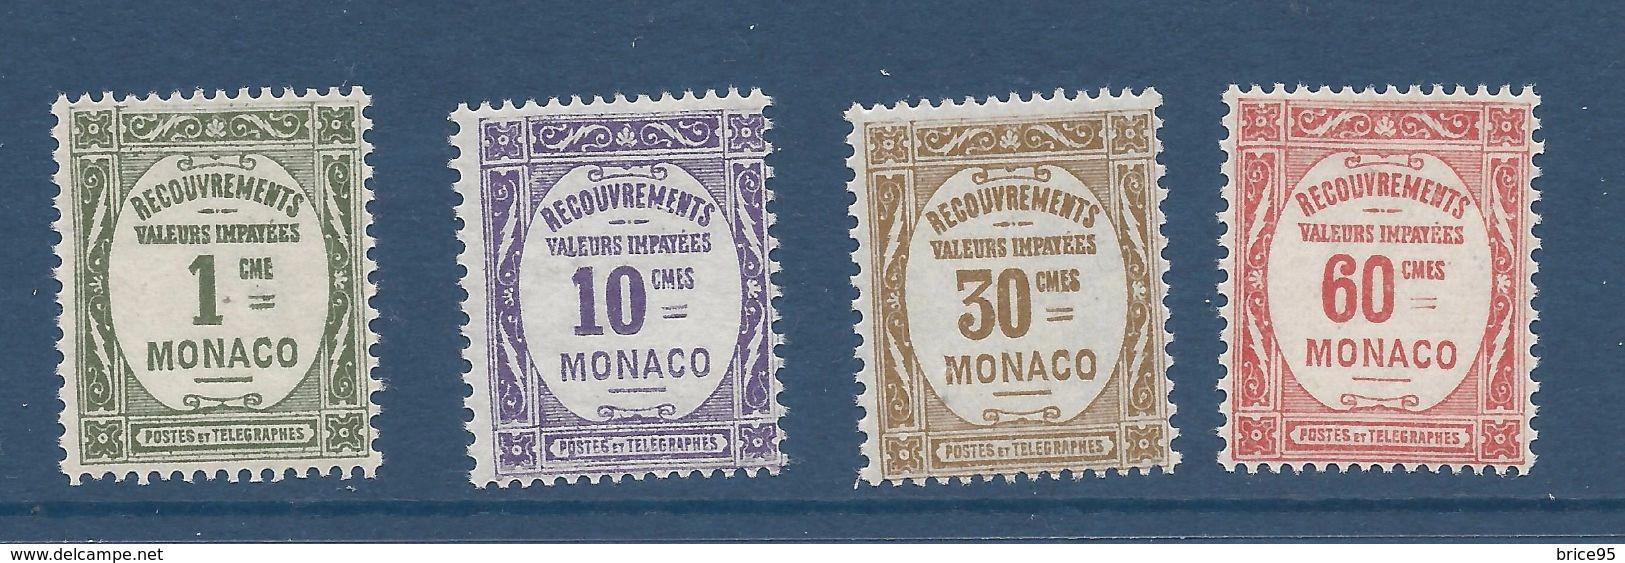 Monaco Taxe - YT N° 13 à 16 * - Neuf Avec Charnière - 1924 à 1932 - Neufs